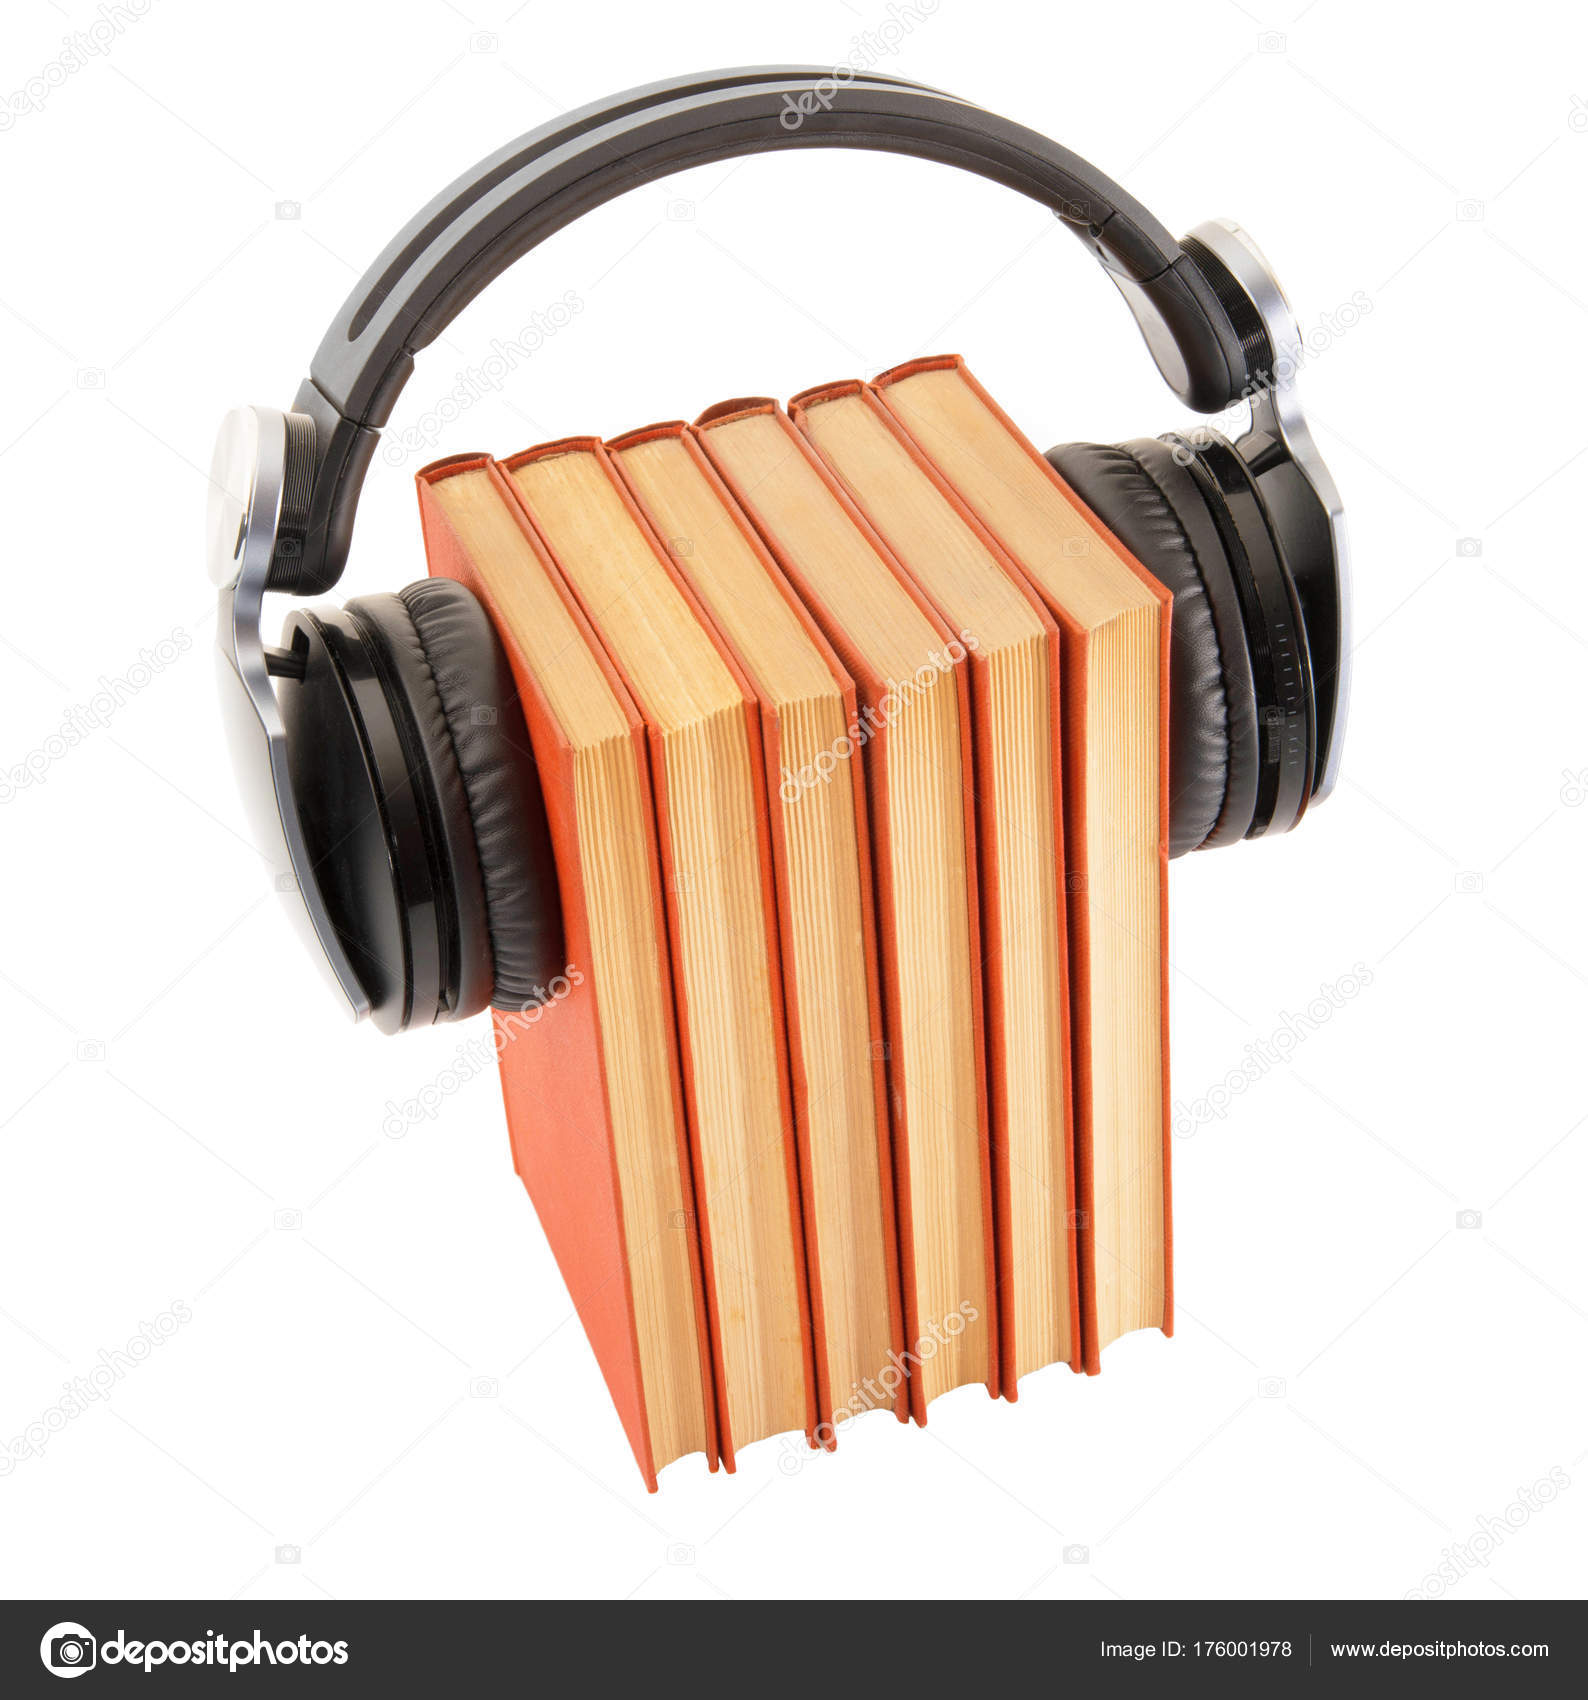 Headphones and books photo